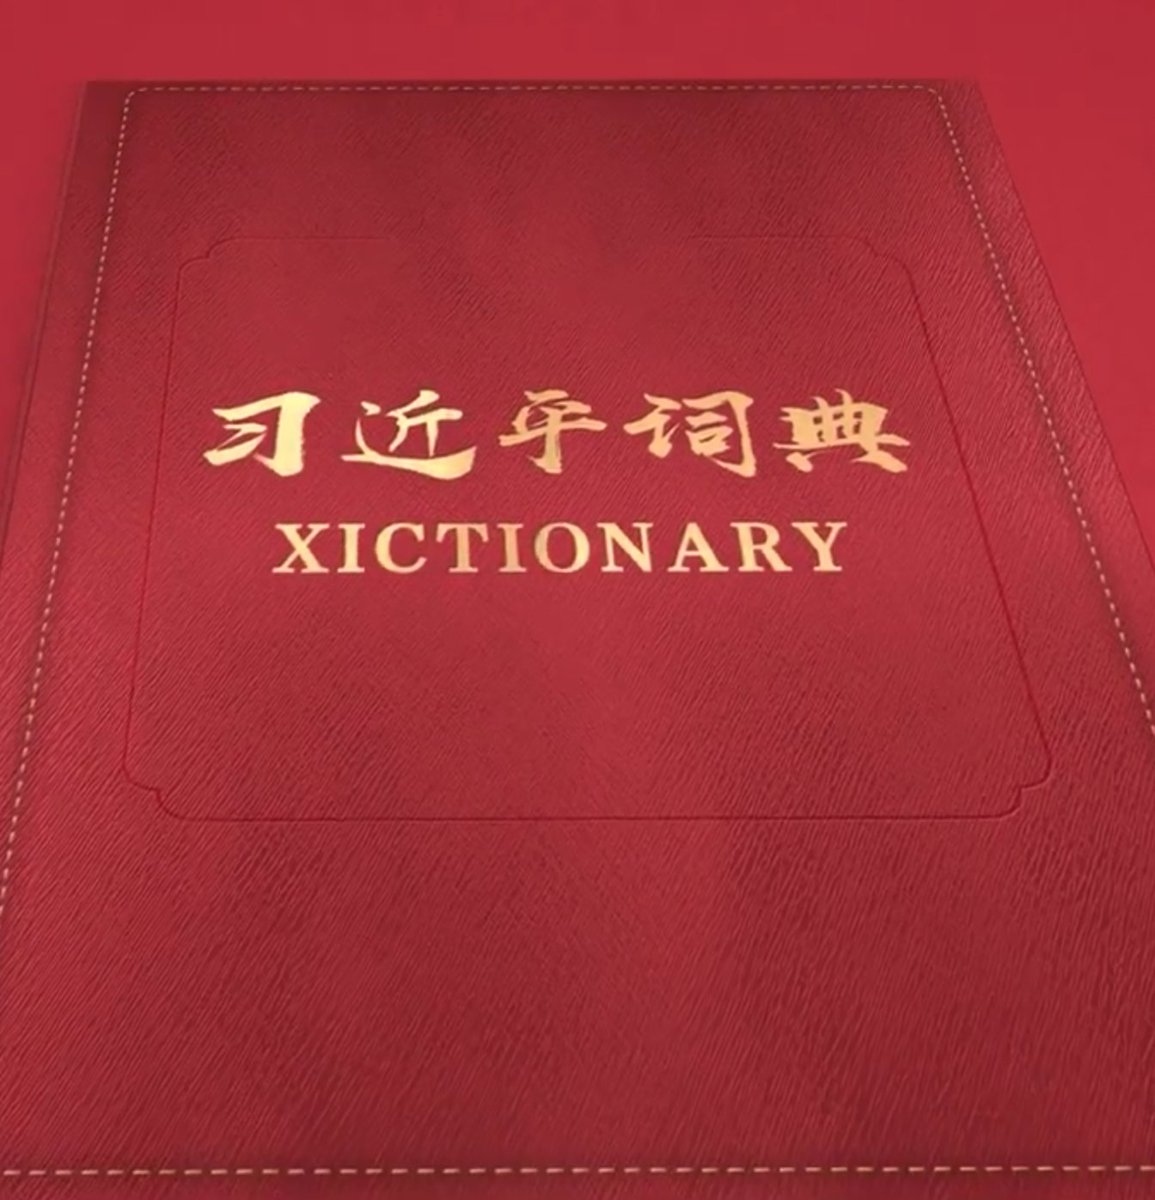 A Xictionary?